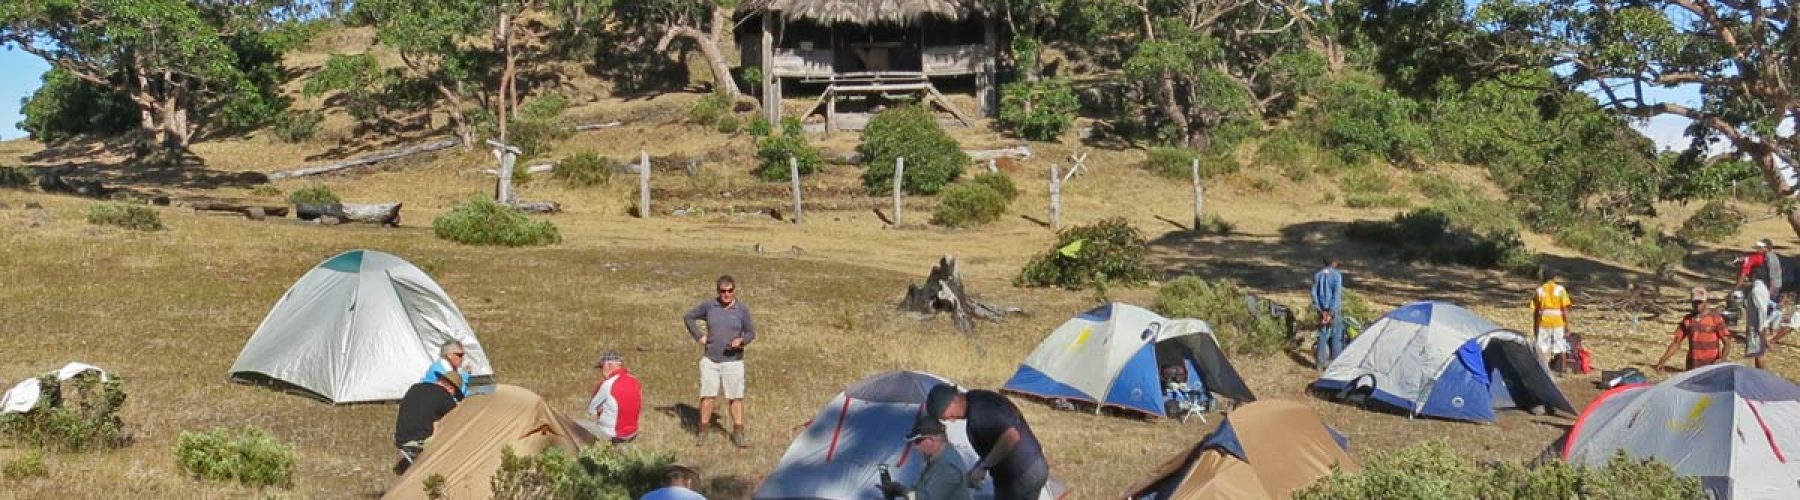 Campsite-mt-ramelau-timor-leste